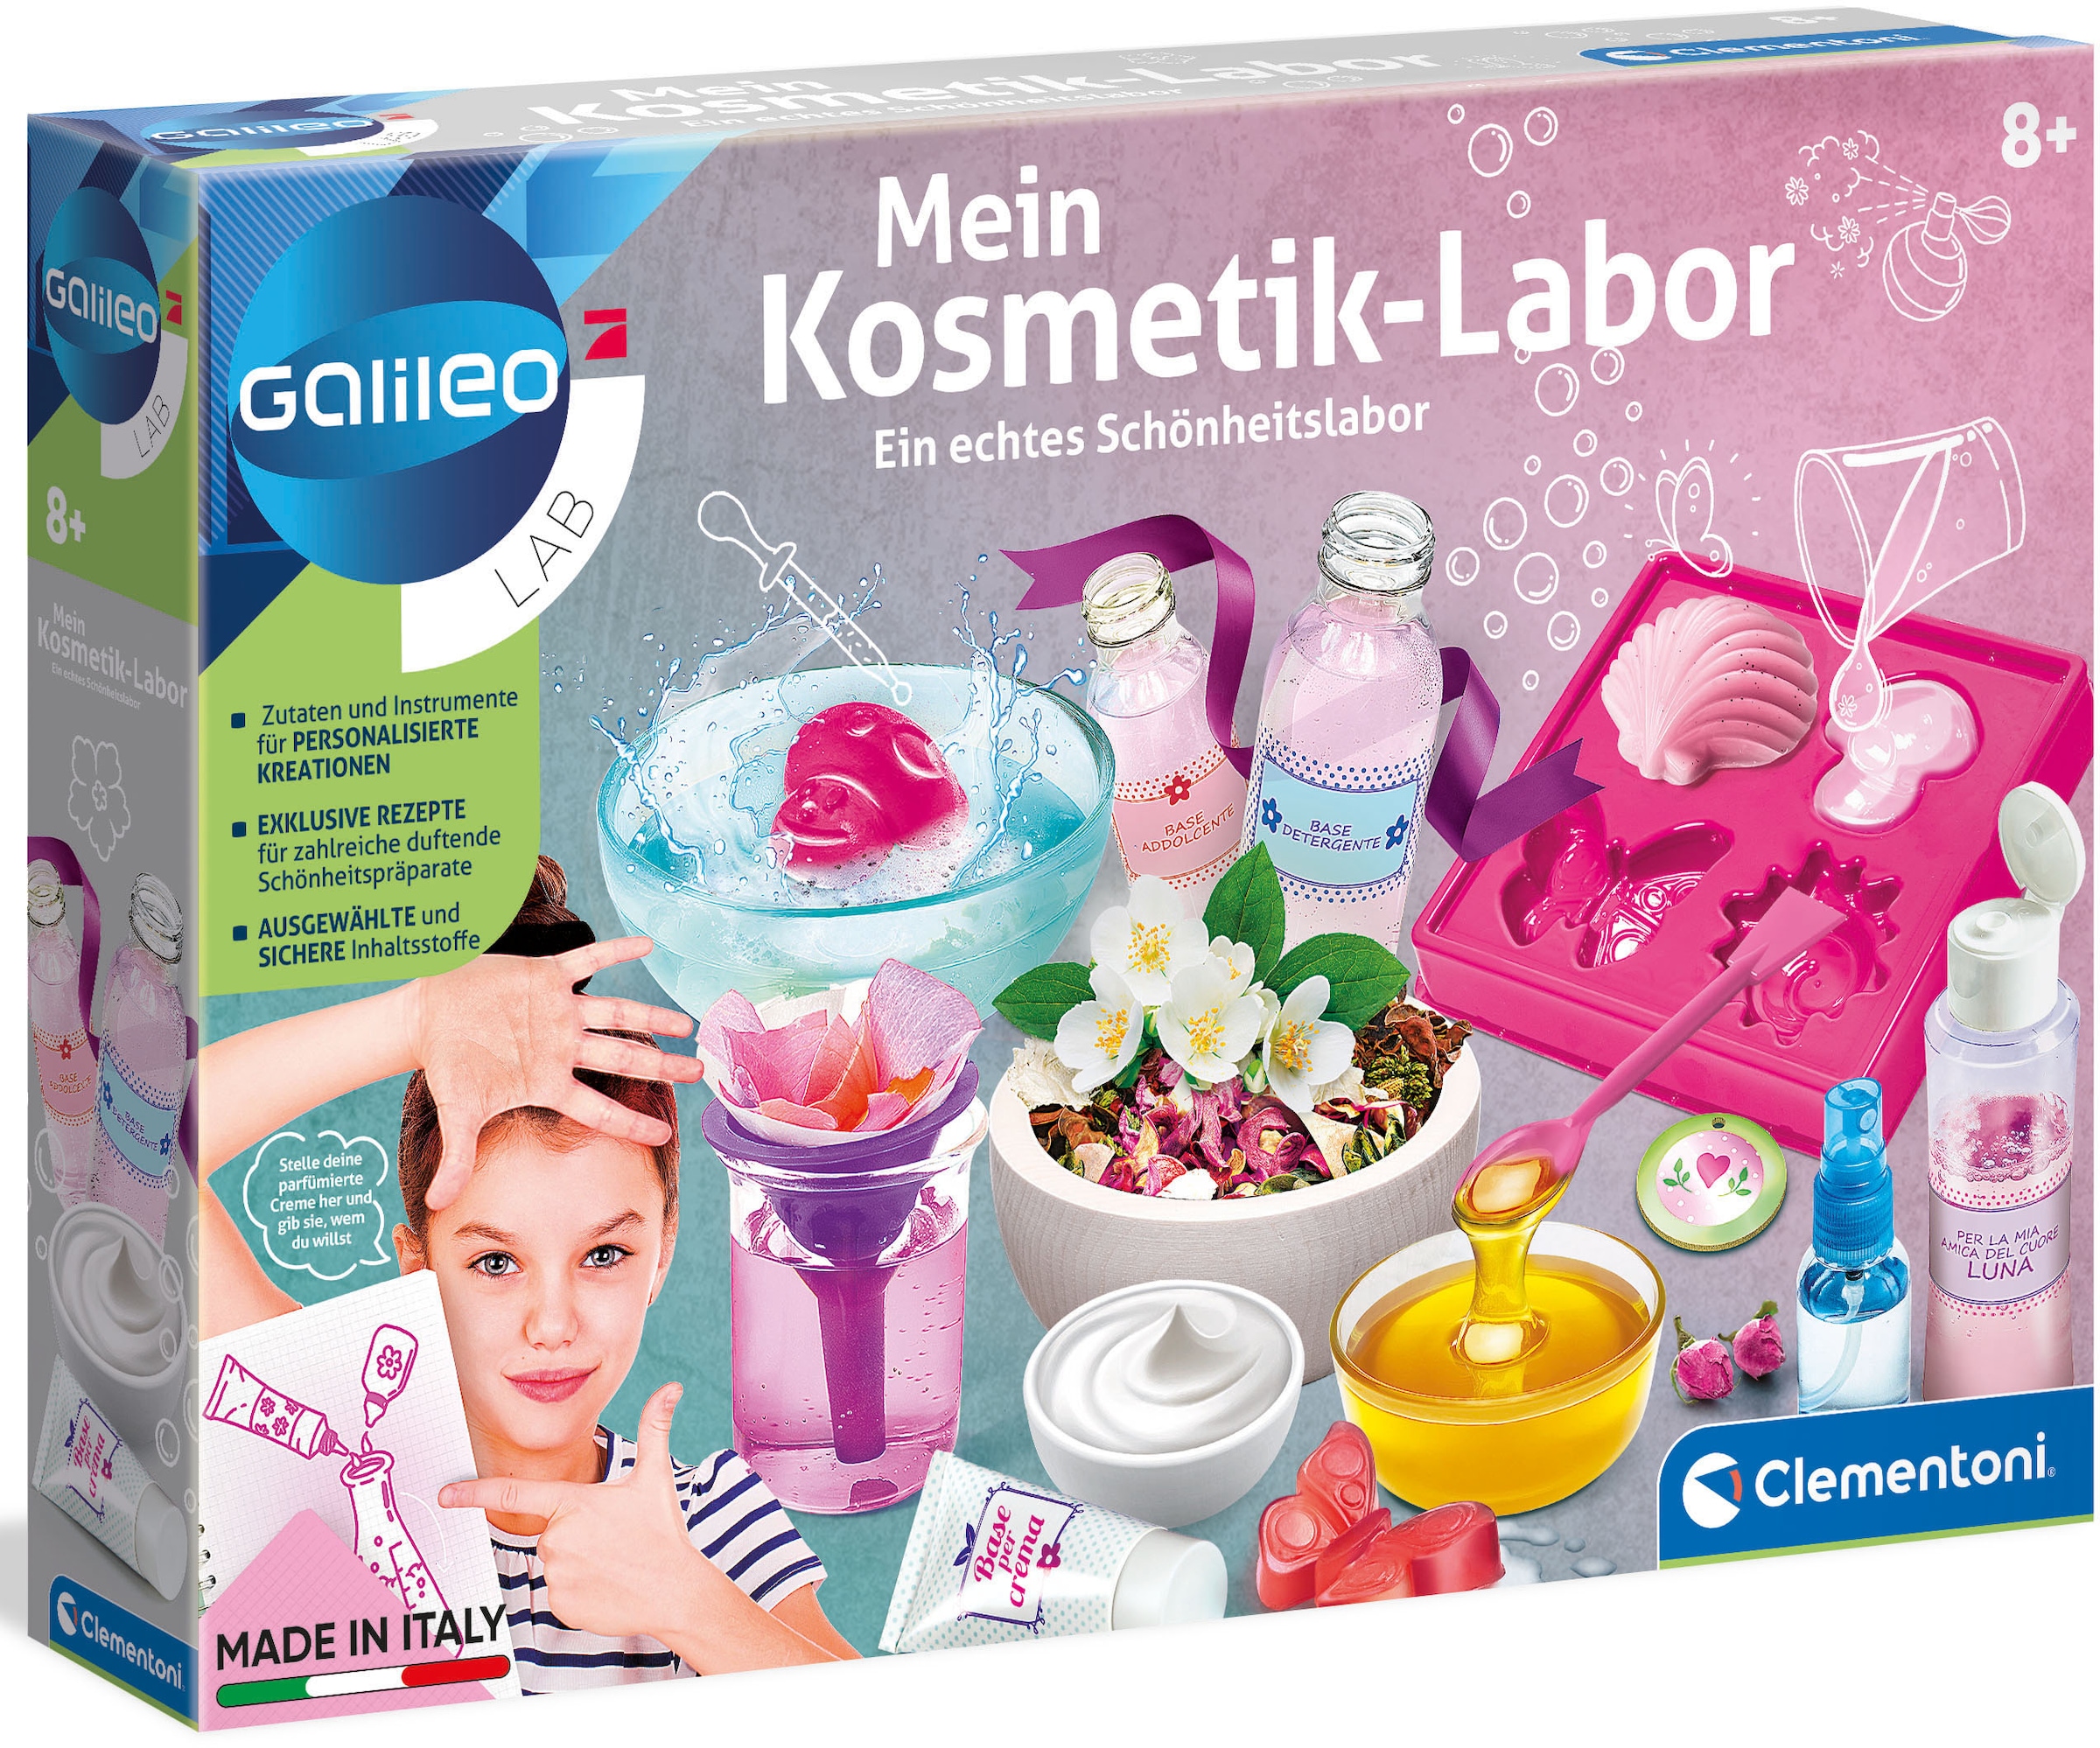 Clementoni® Experimentierkasten »Galileo, Mein Kosmetik-Labor«, Made in Europe